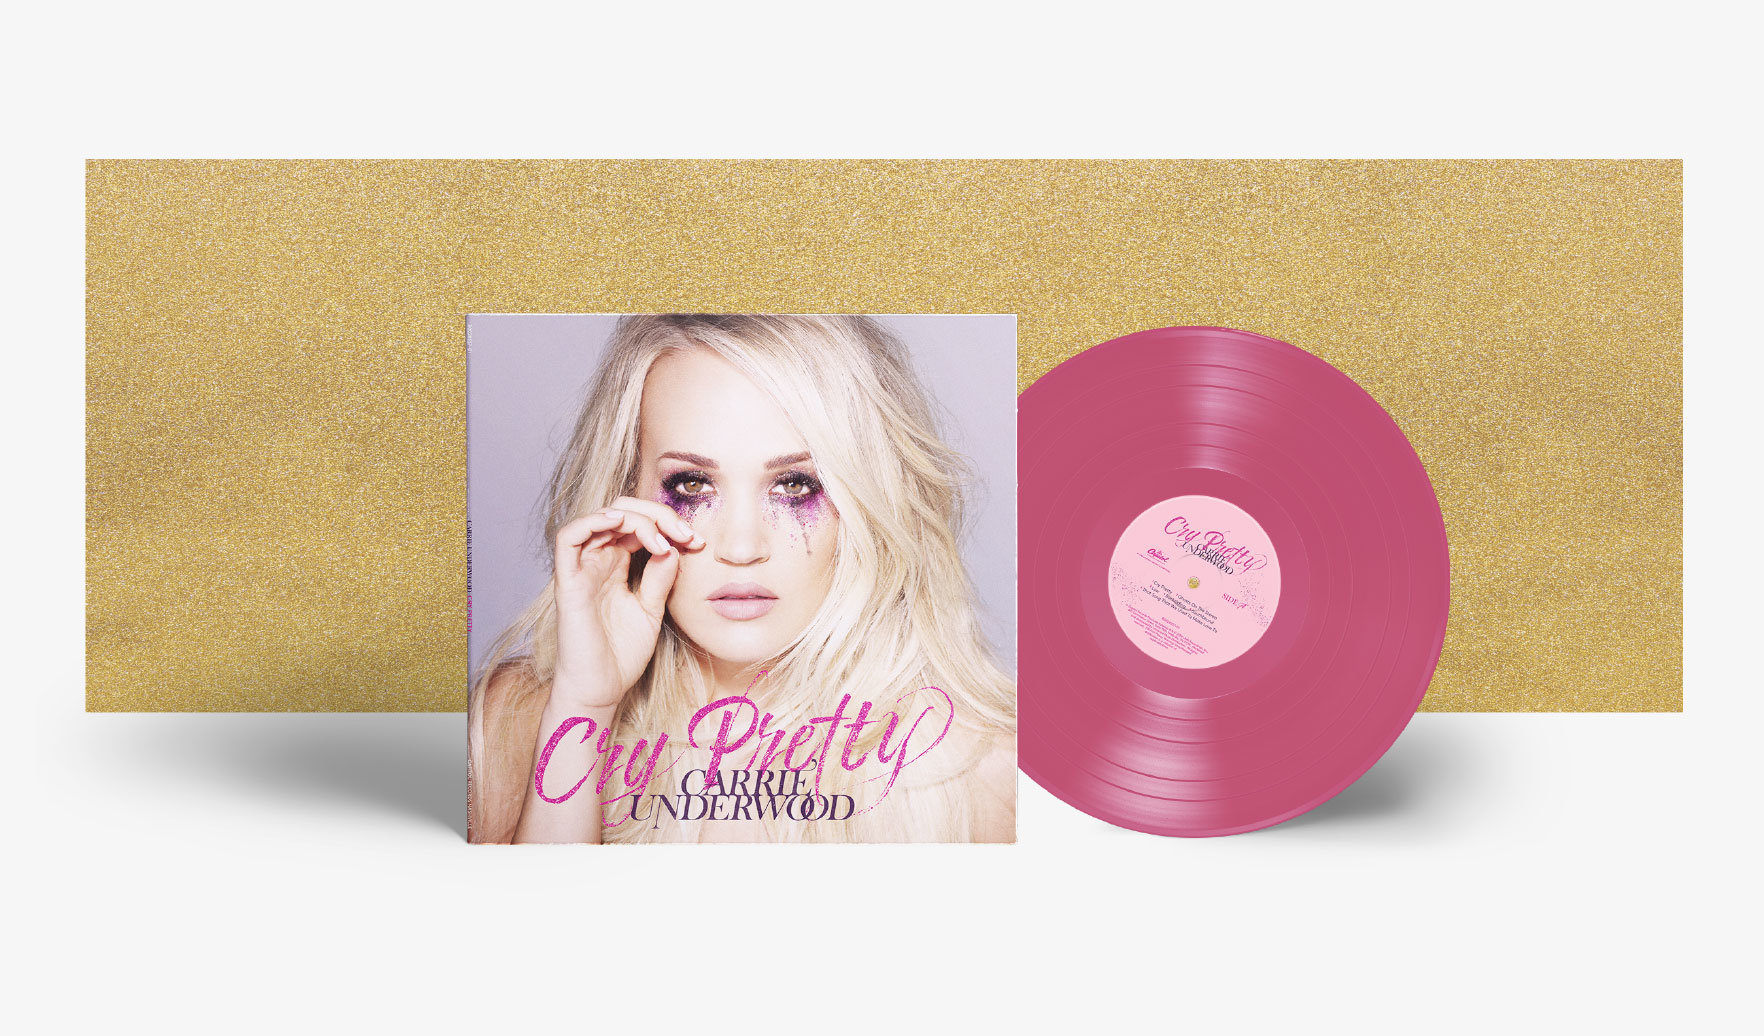 Carrie Underwood Cry Pretty Vinyl Album Cover Design